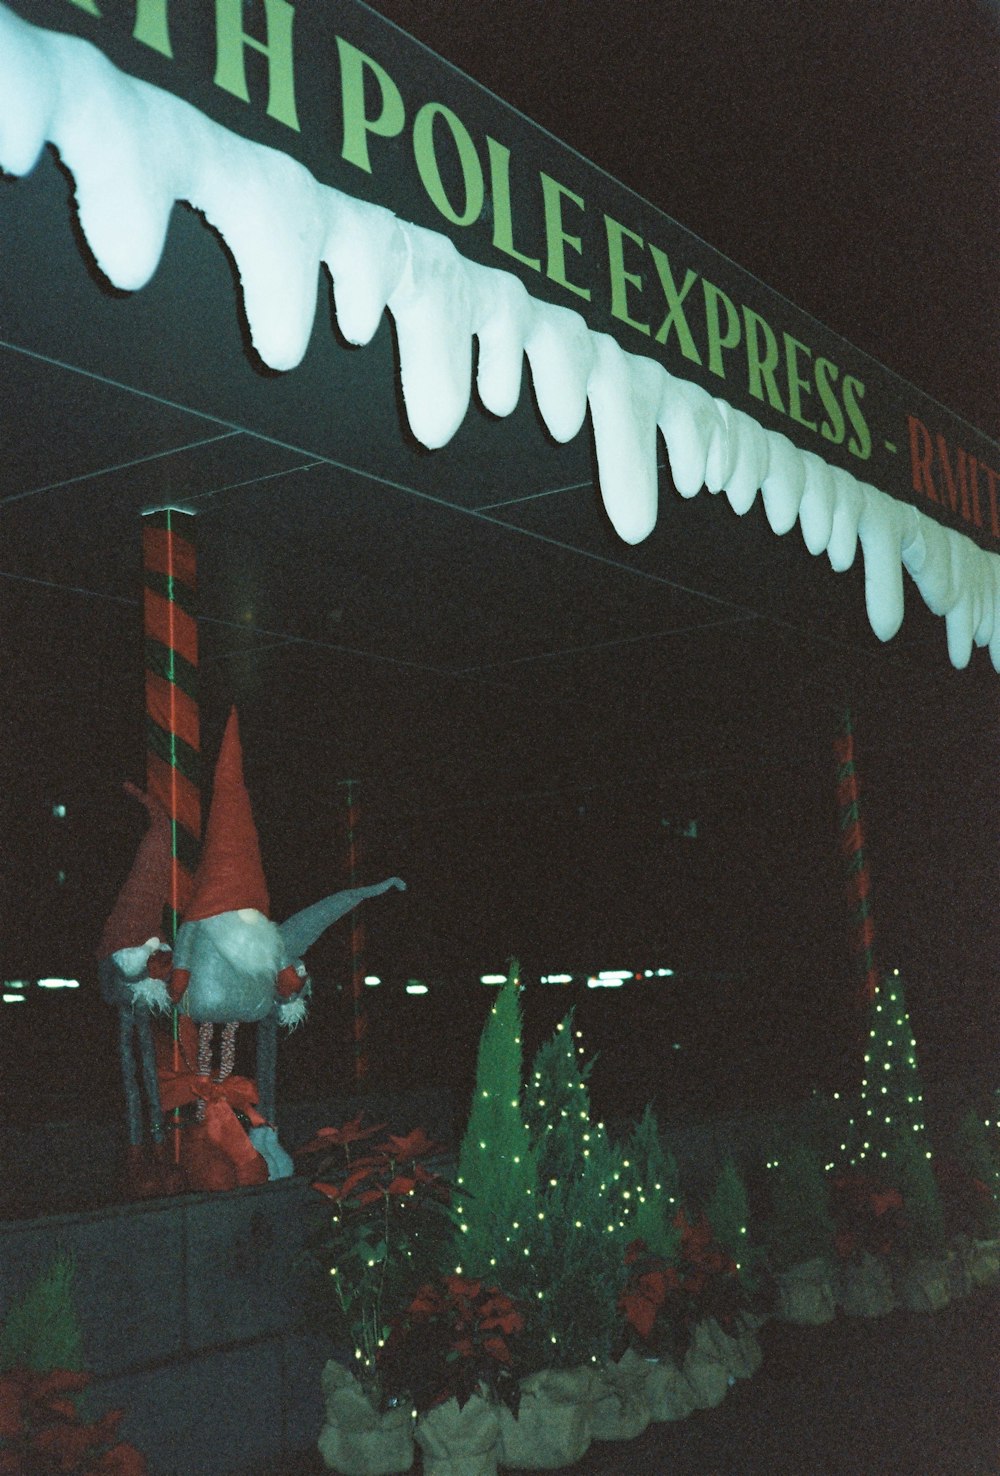 a christmas display at the north pole express